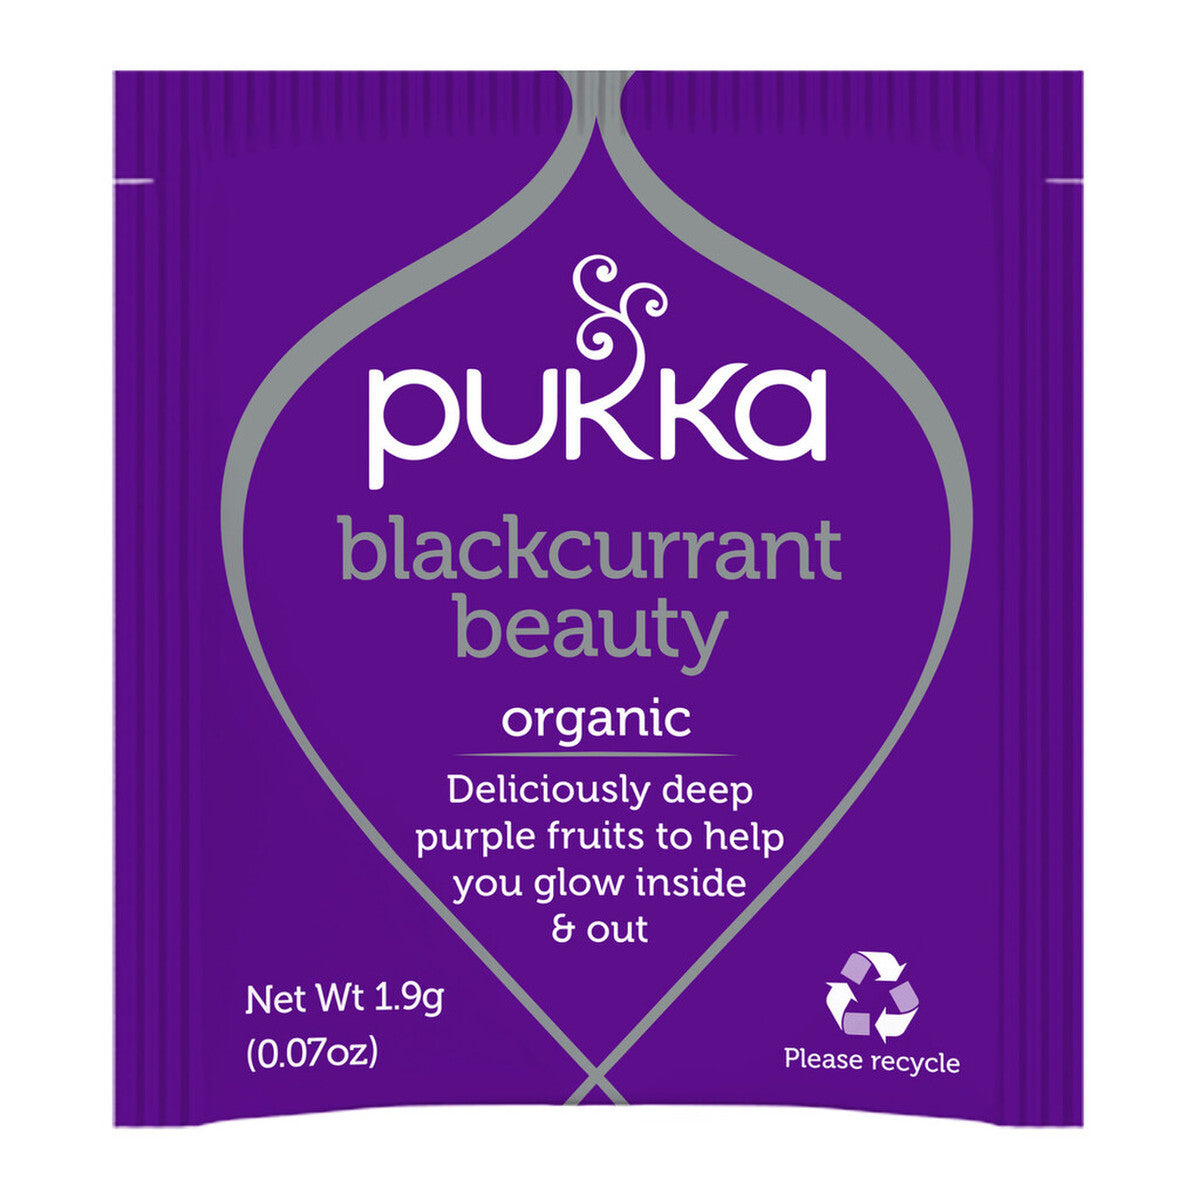 Pukka Herbs 20 Herbal Tea Bags, Blackcurrant Beauty